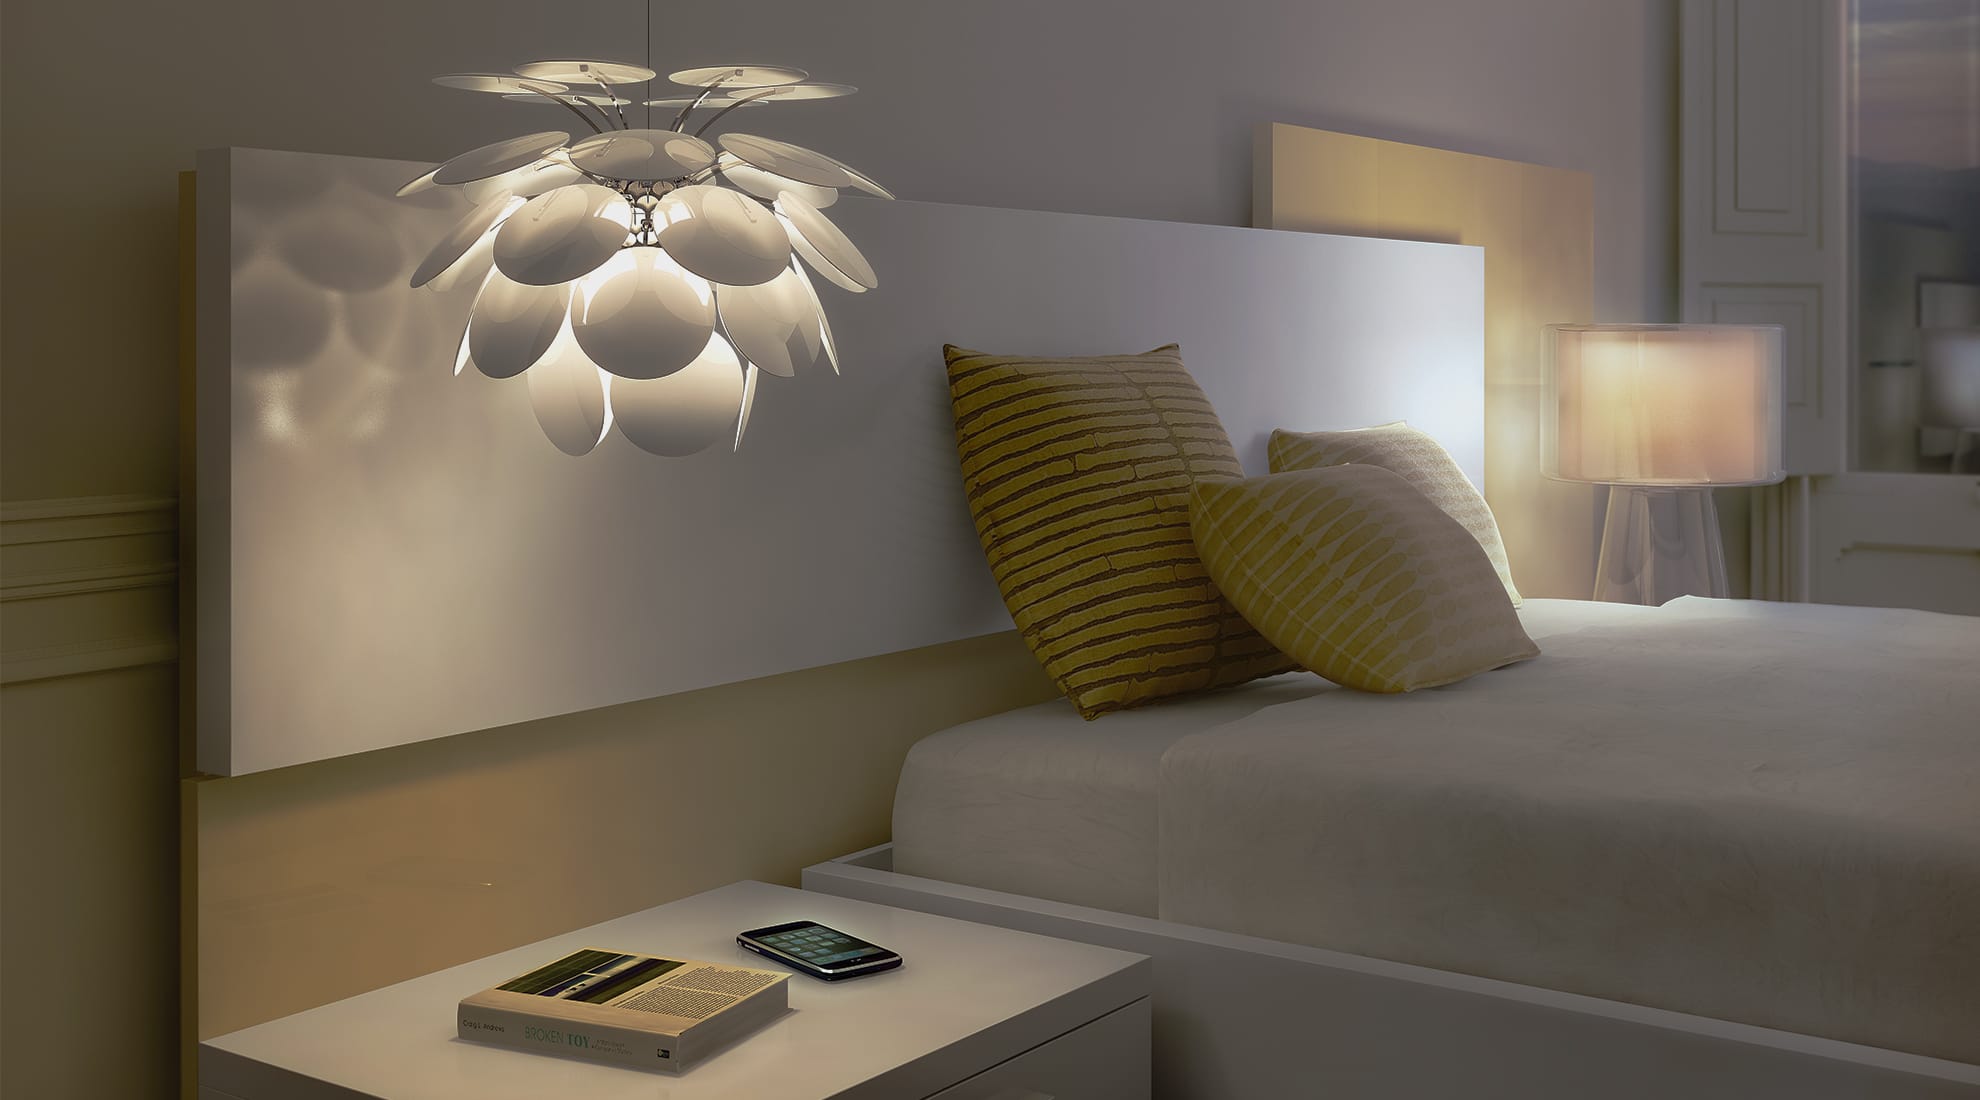 Bedroom Lighting Design Guide | Planning Your Bedroom Lighting at Lumens.com